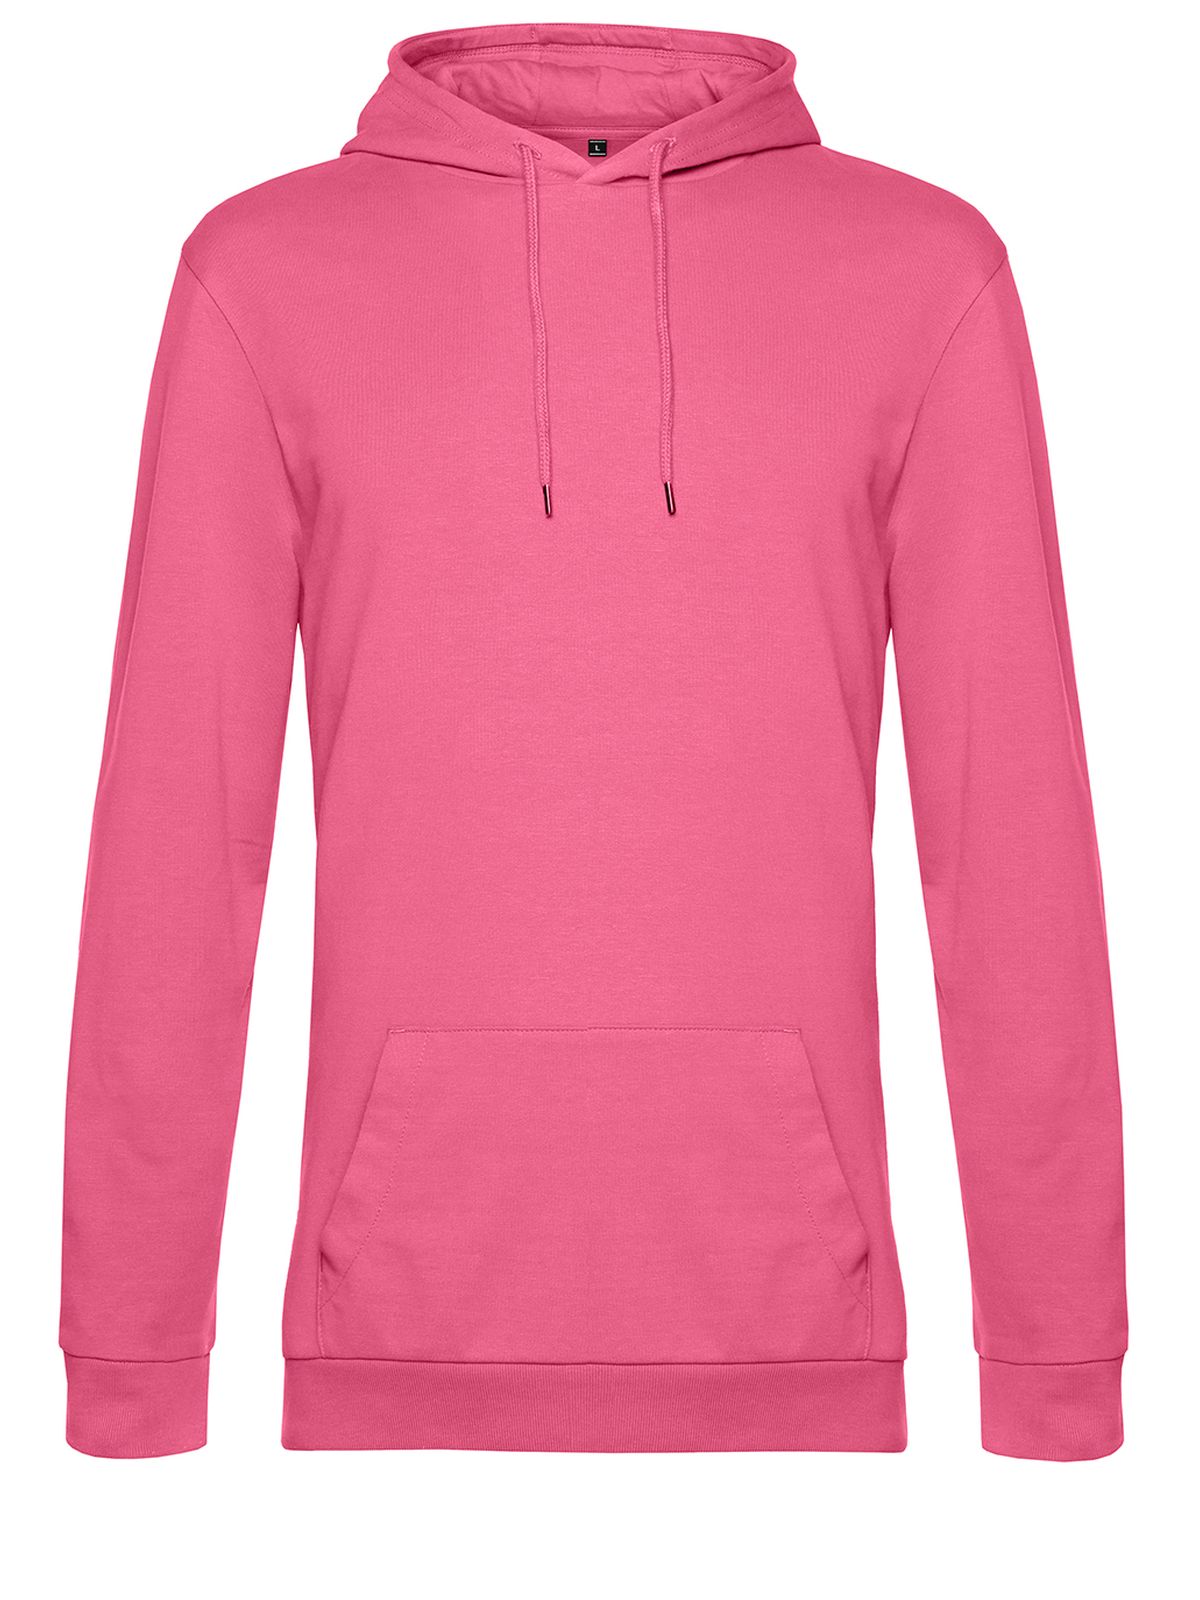 hoodie-pink-fizz.webp